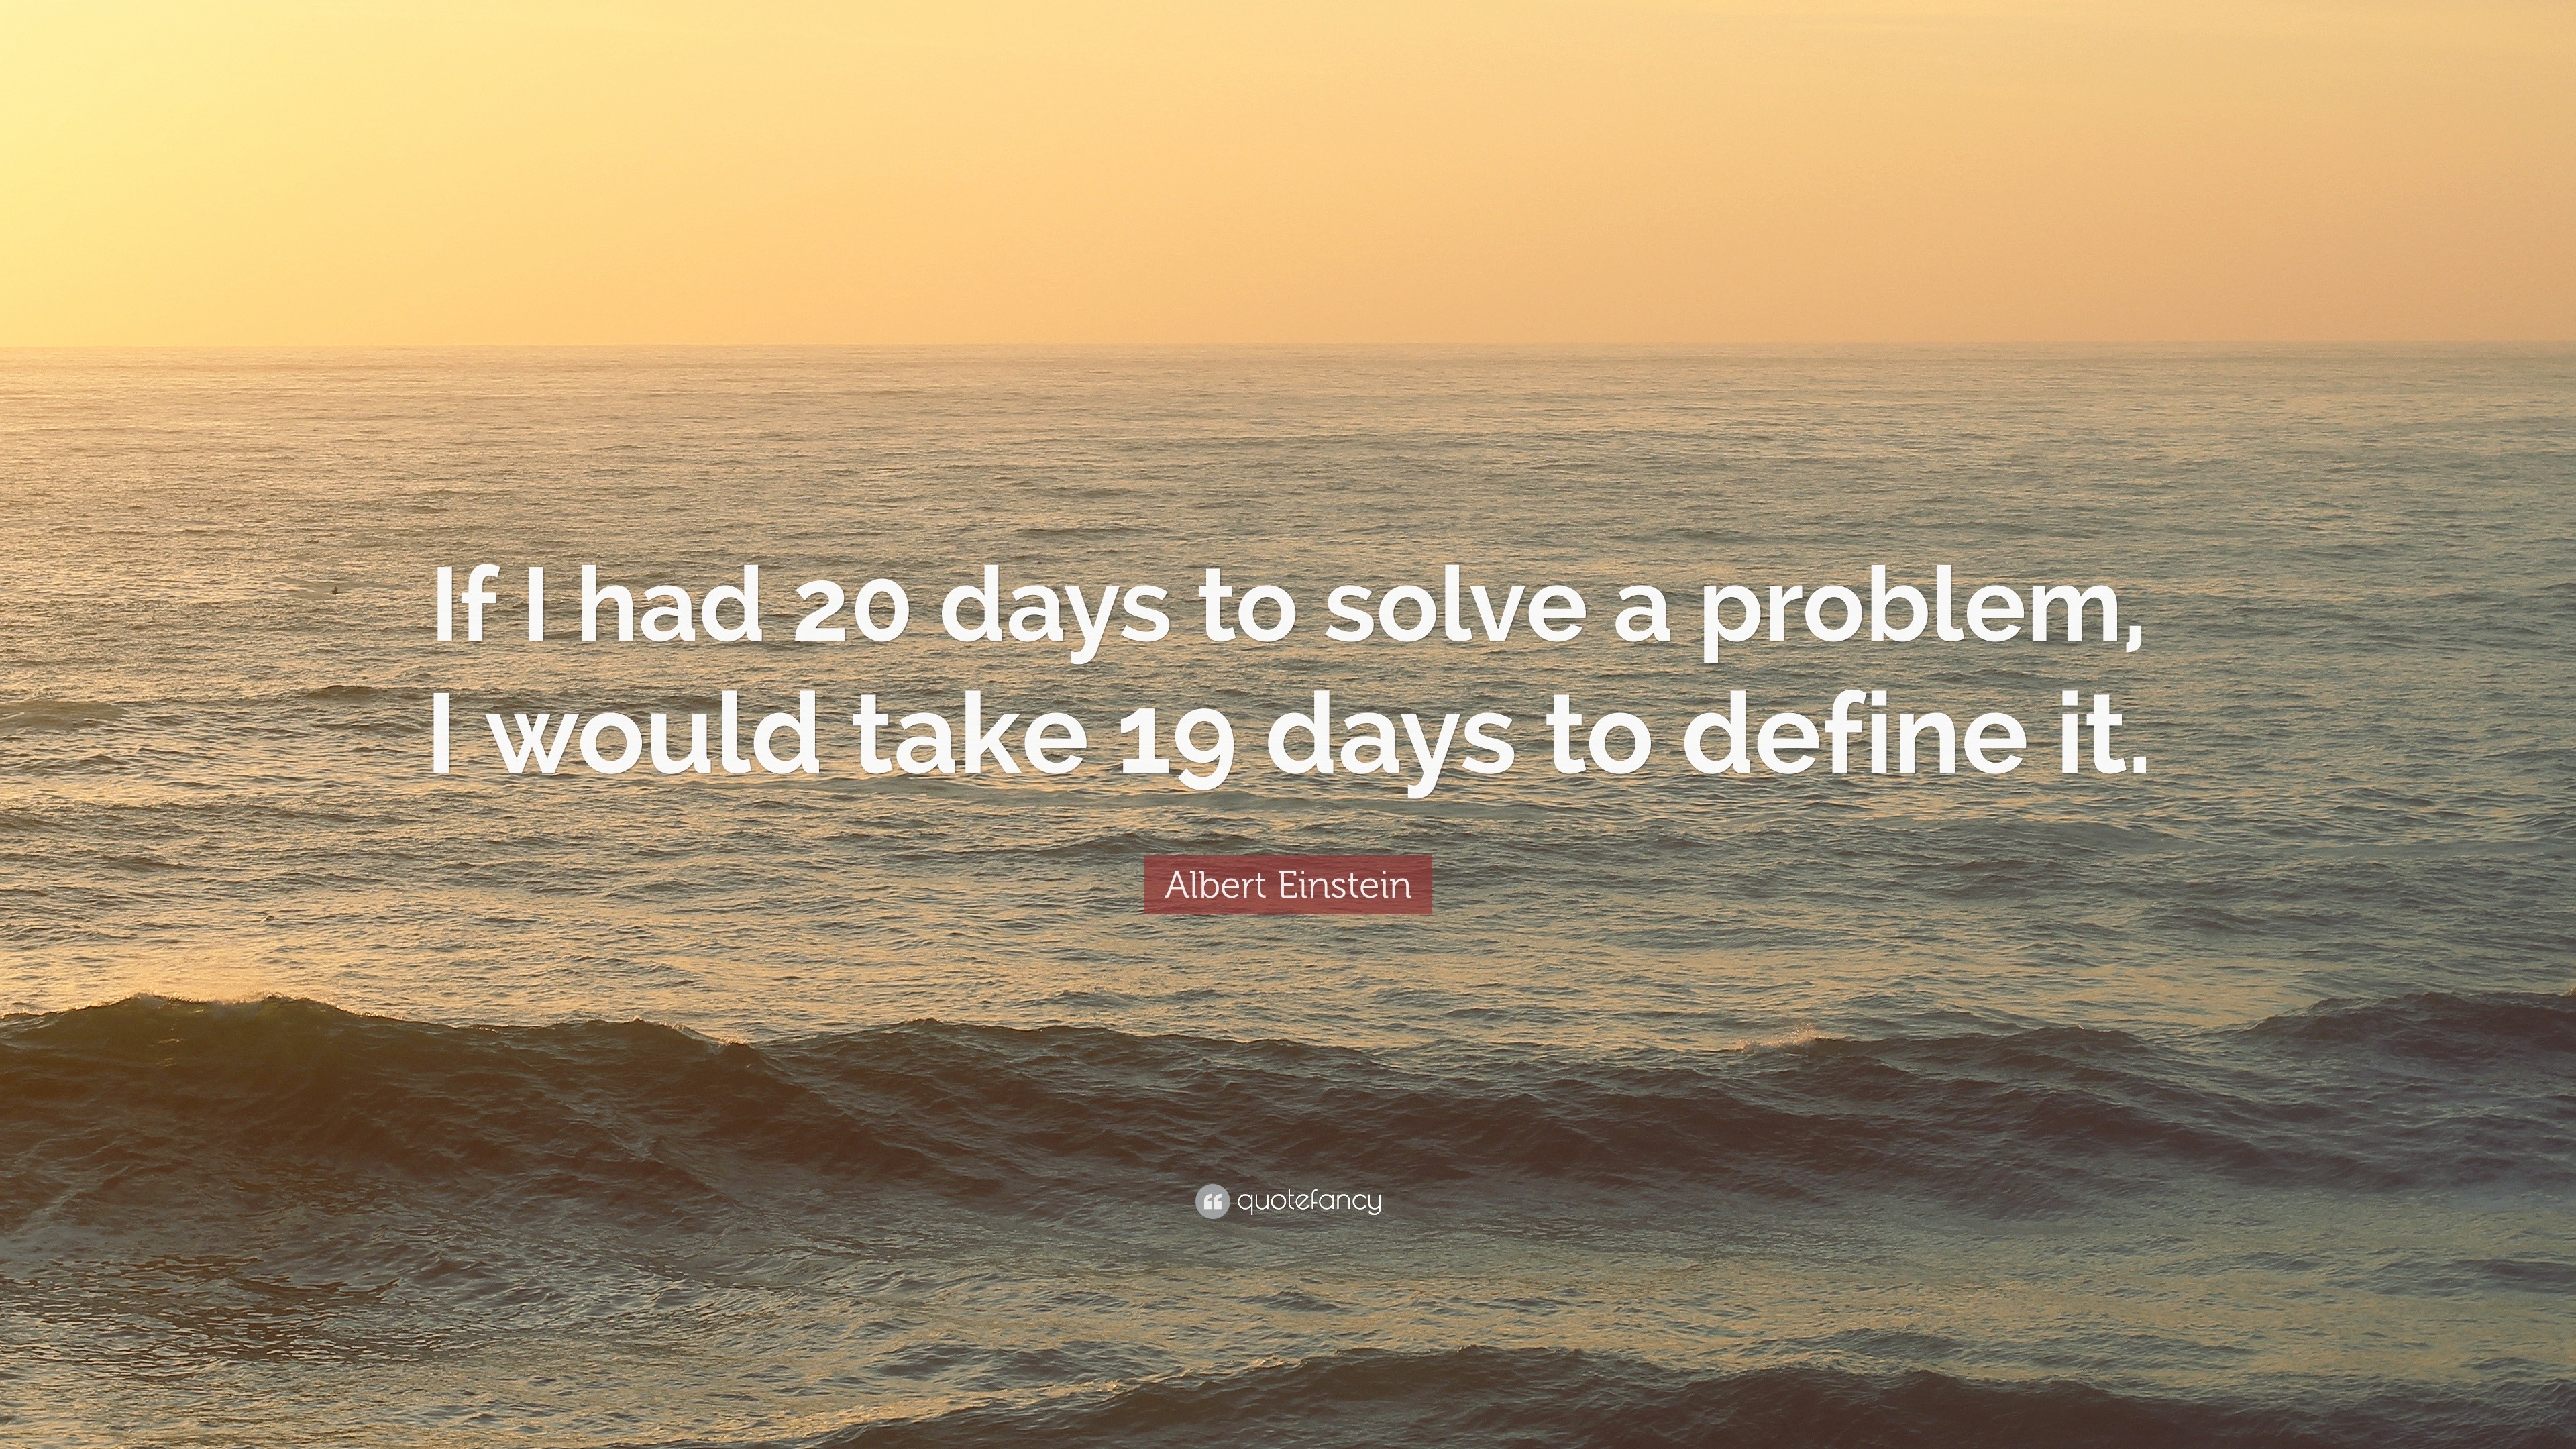 Albert Einstein Quote “If I had 20 days to solve a problem I